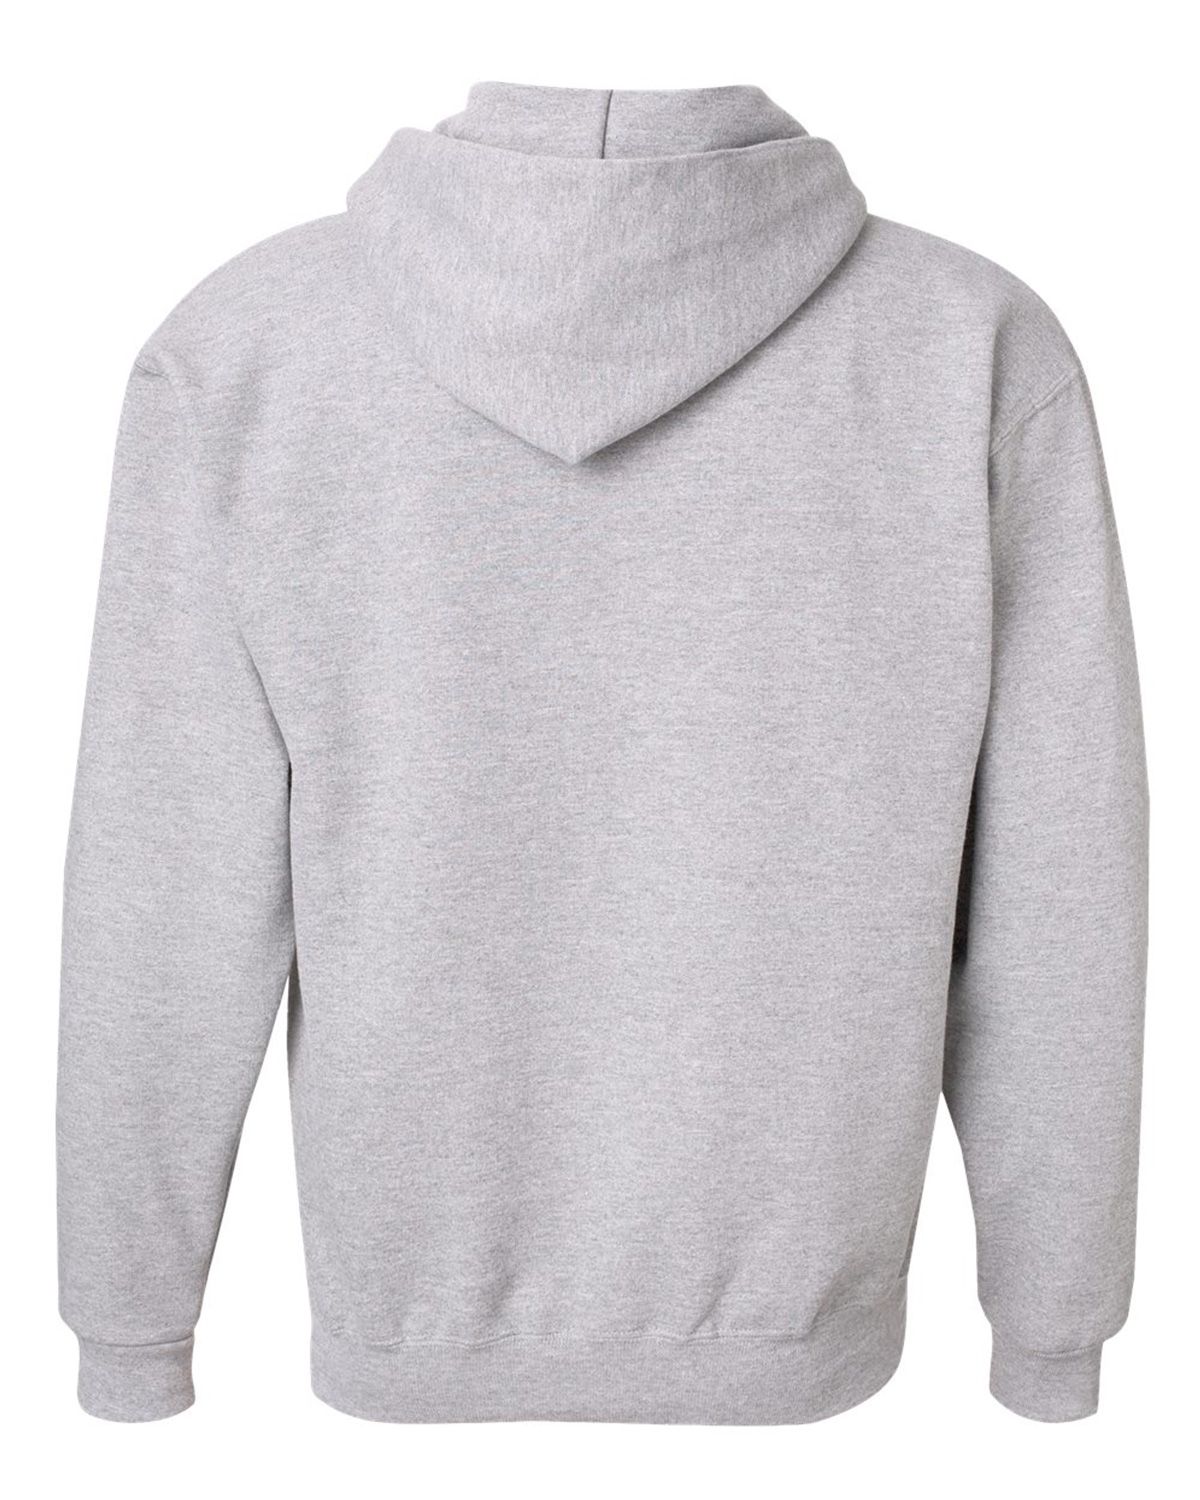 Size Chart for Jerzees 4997MR SUPER SWEATS Hooded Sweatshirt